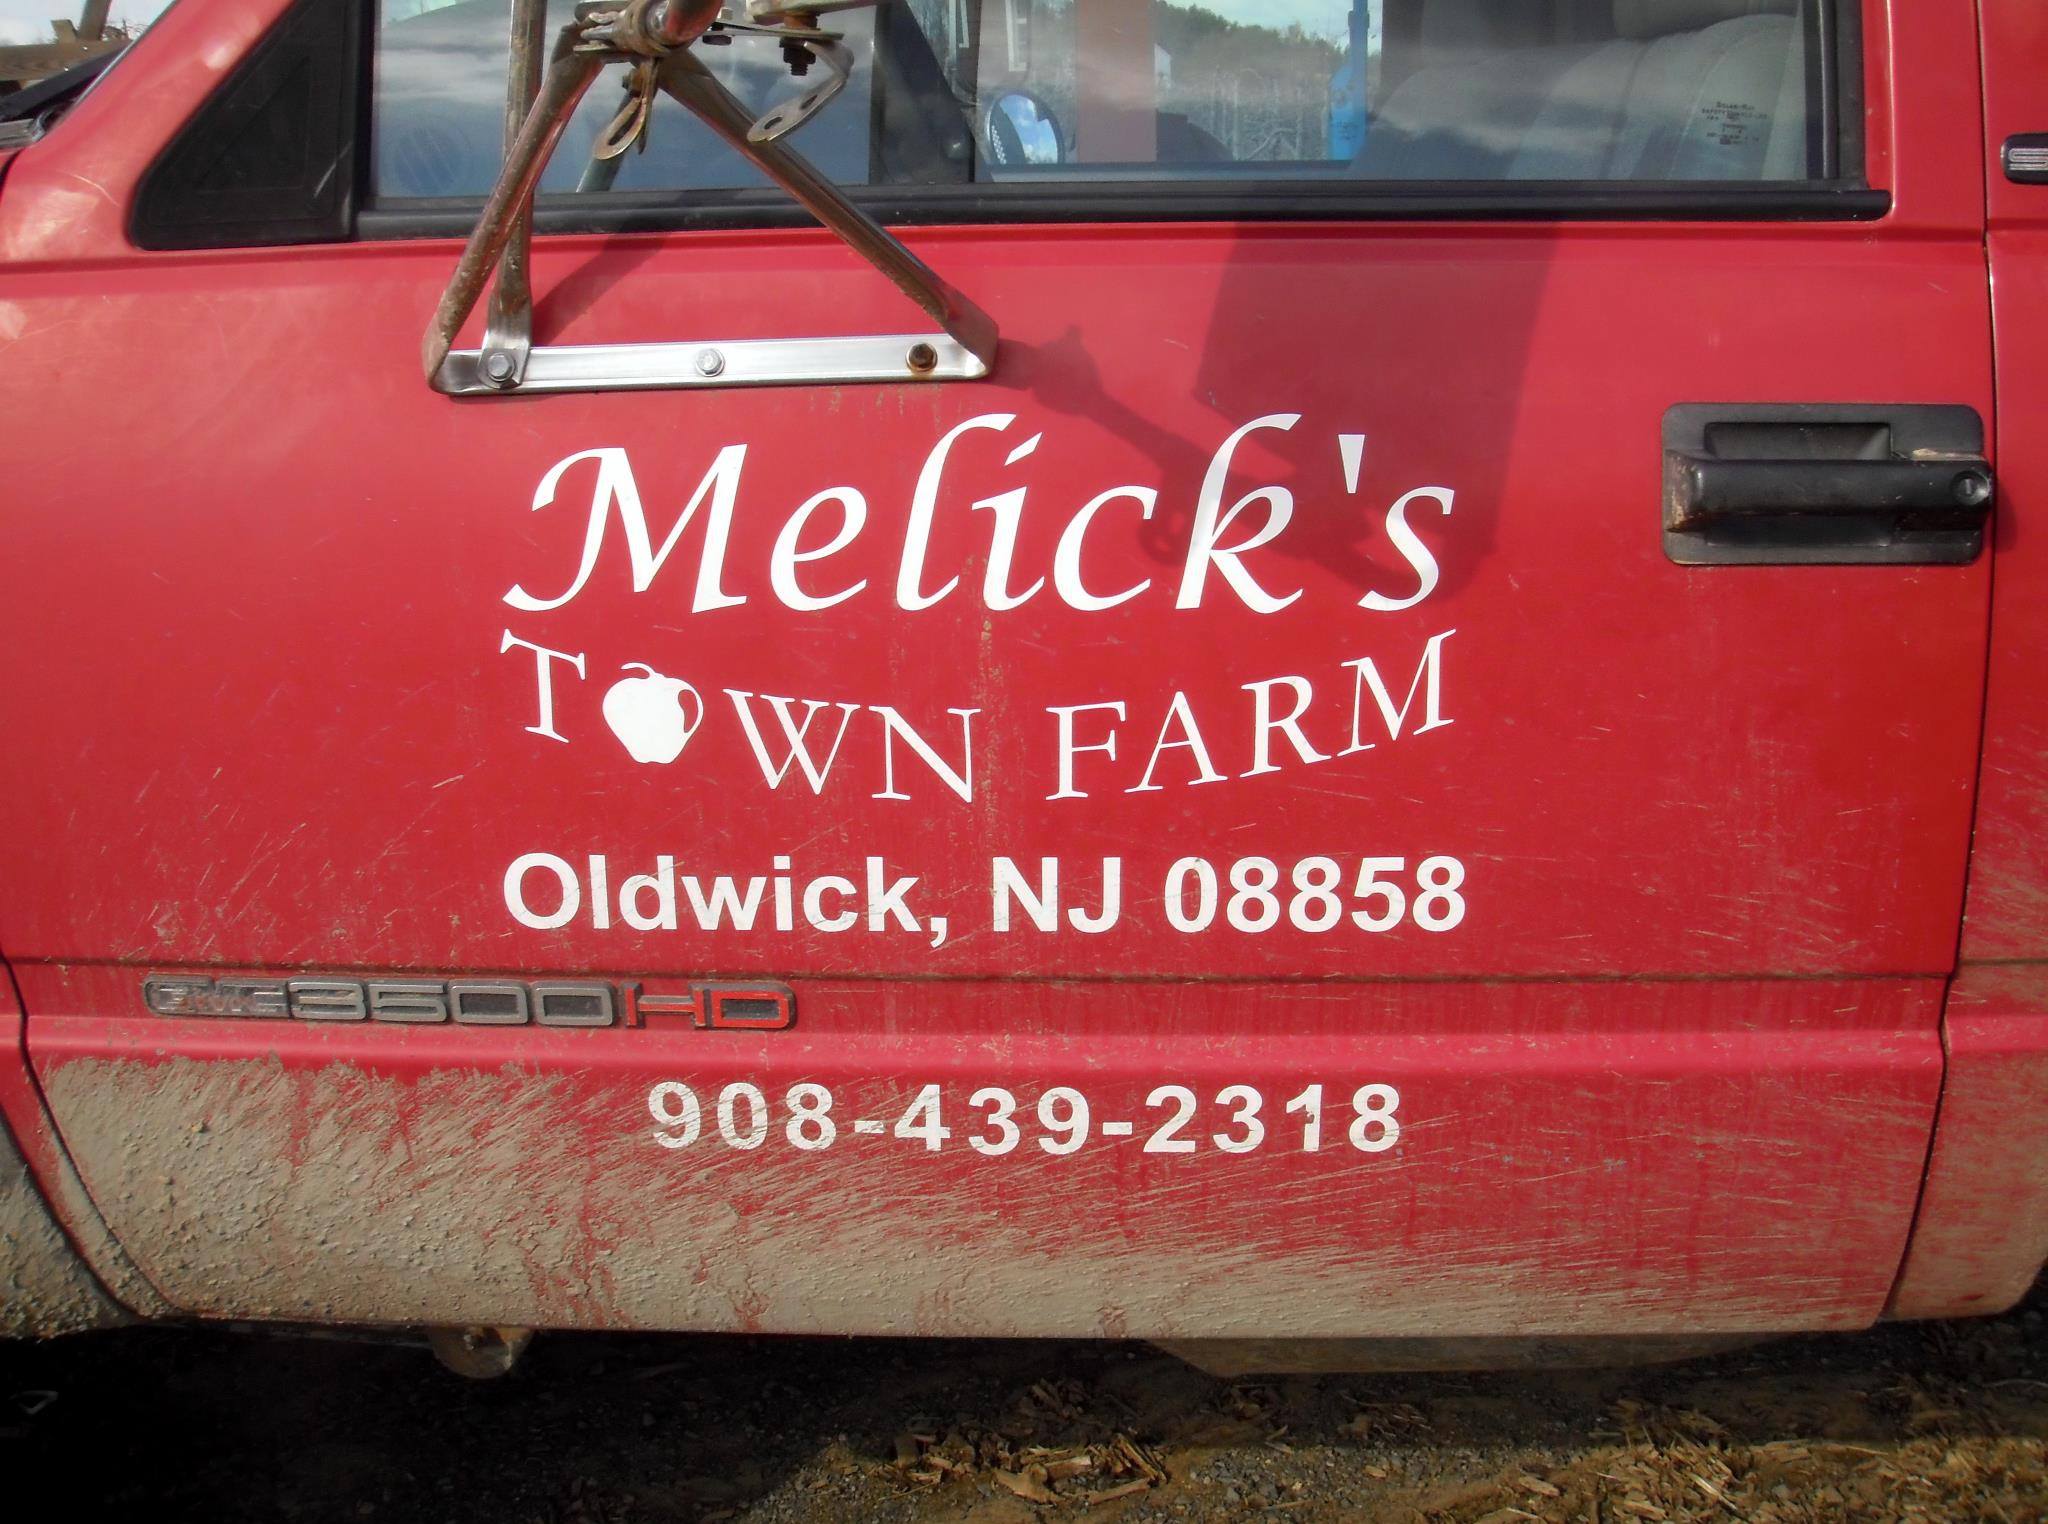 Mellick's Town Farm